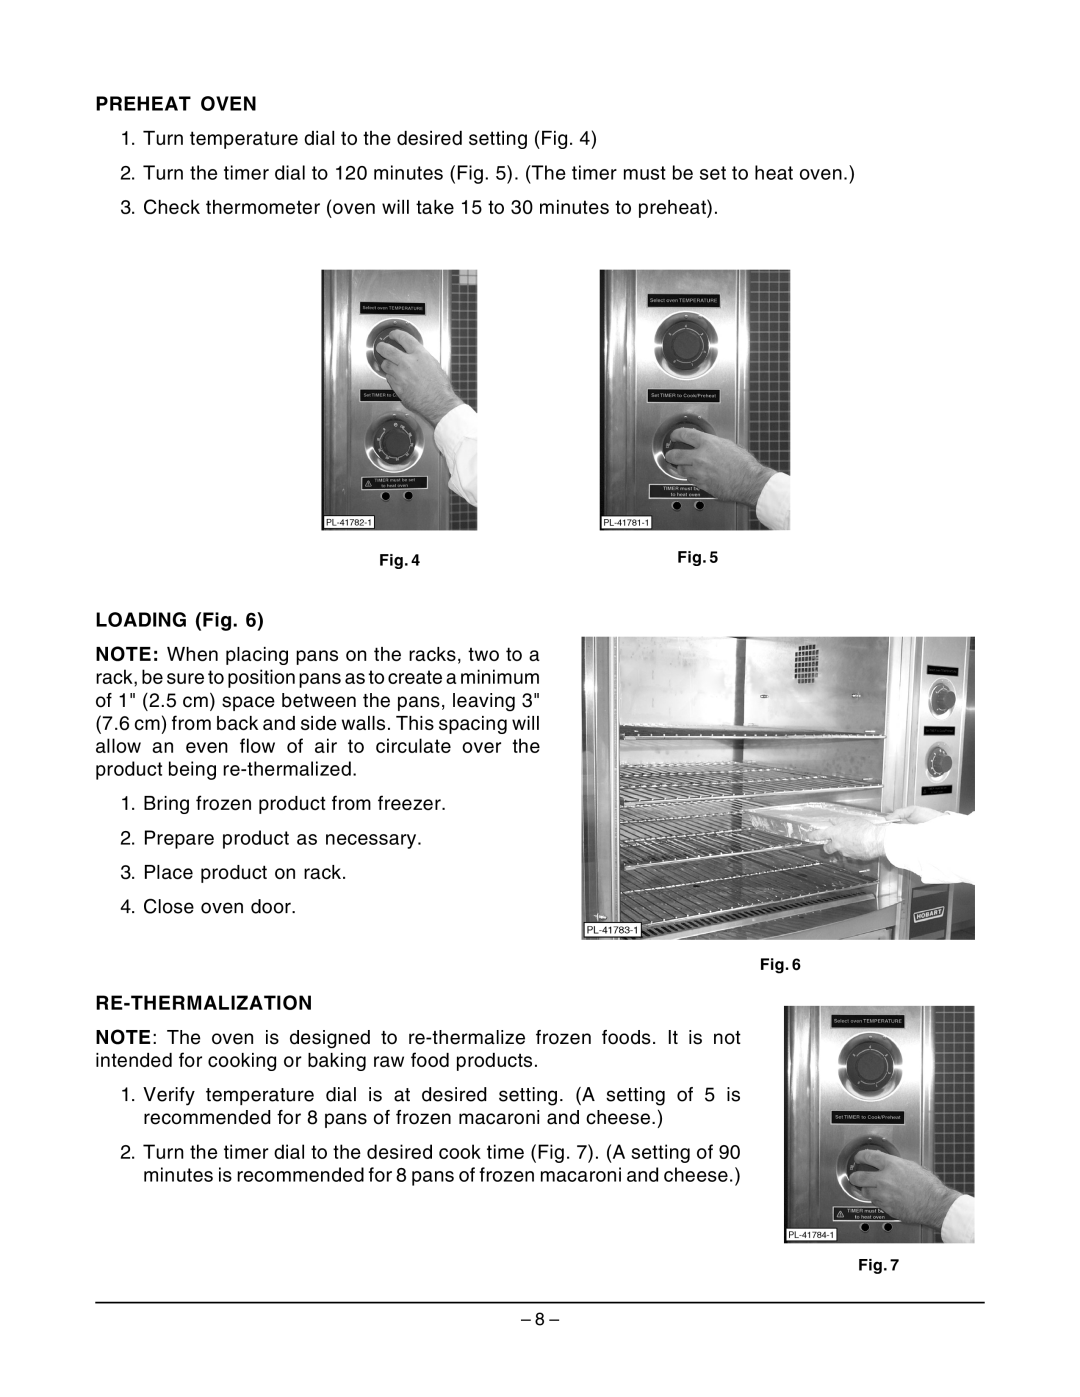 Hobart ML-132064 manual Preheat Oven, LOADING Fig, Re-Thermalization 